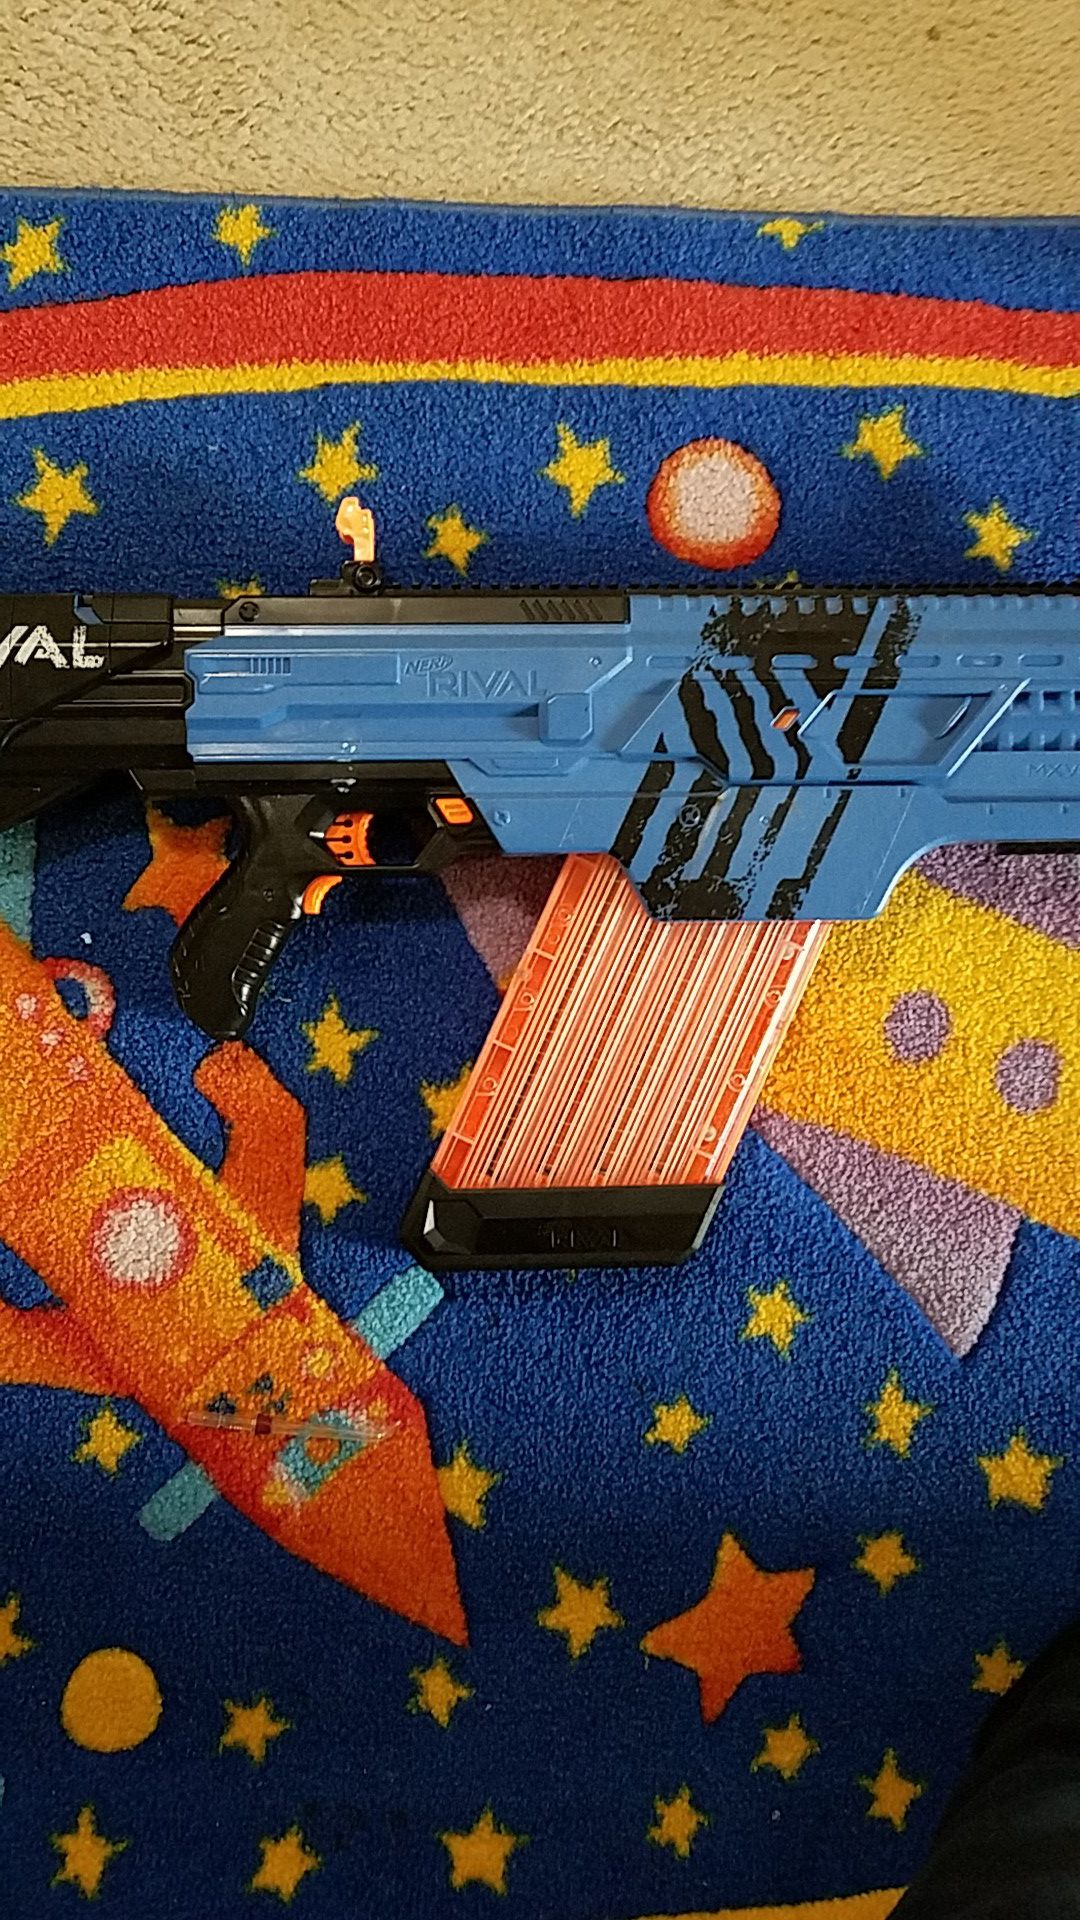 Nerf rival toy gun for kids 35$